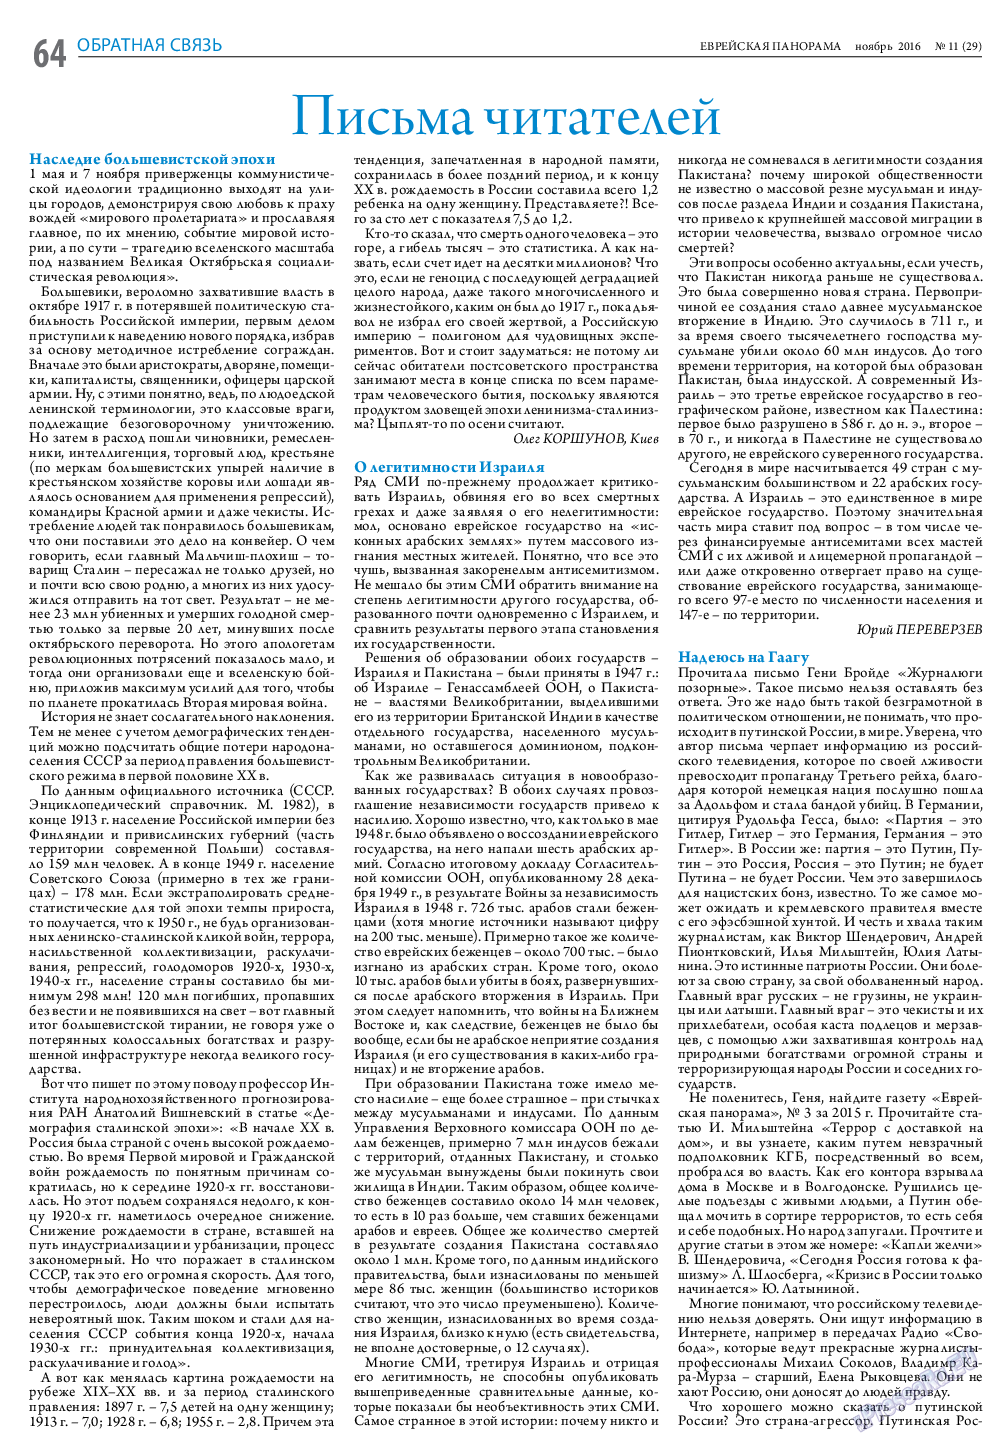 Еврейская панорама, газета. 2016 №11 стр.64